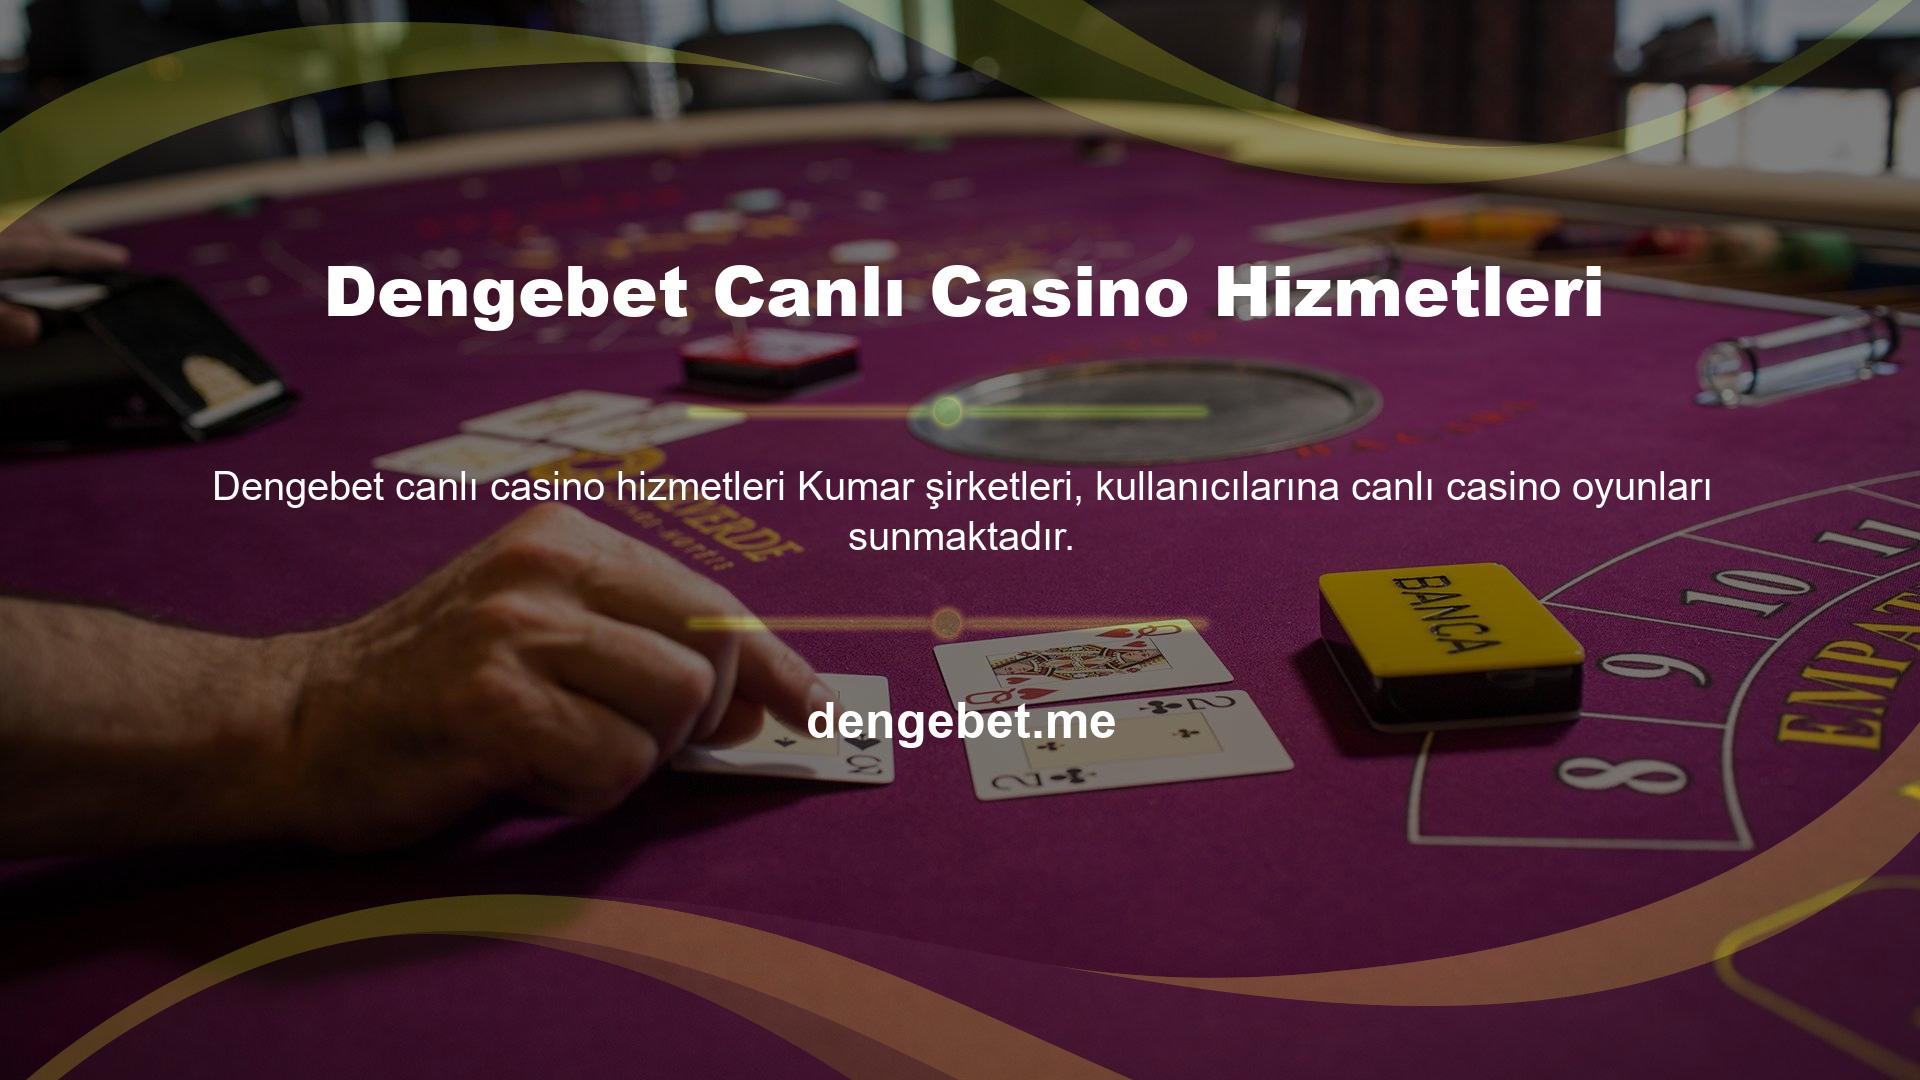 Ancak Dengebet Canlı Casino Hizmeti Dengebet Canlı Casino Hizmeti 7/24 çalışmaktadır